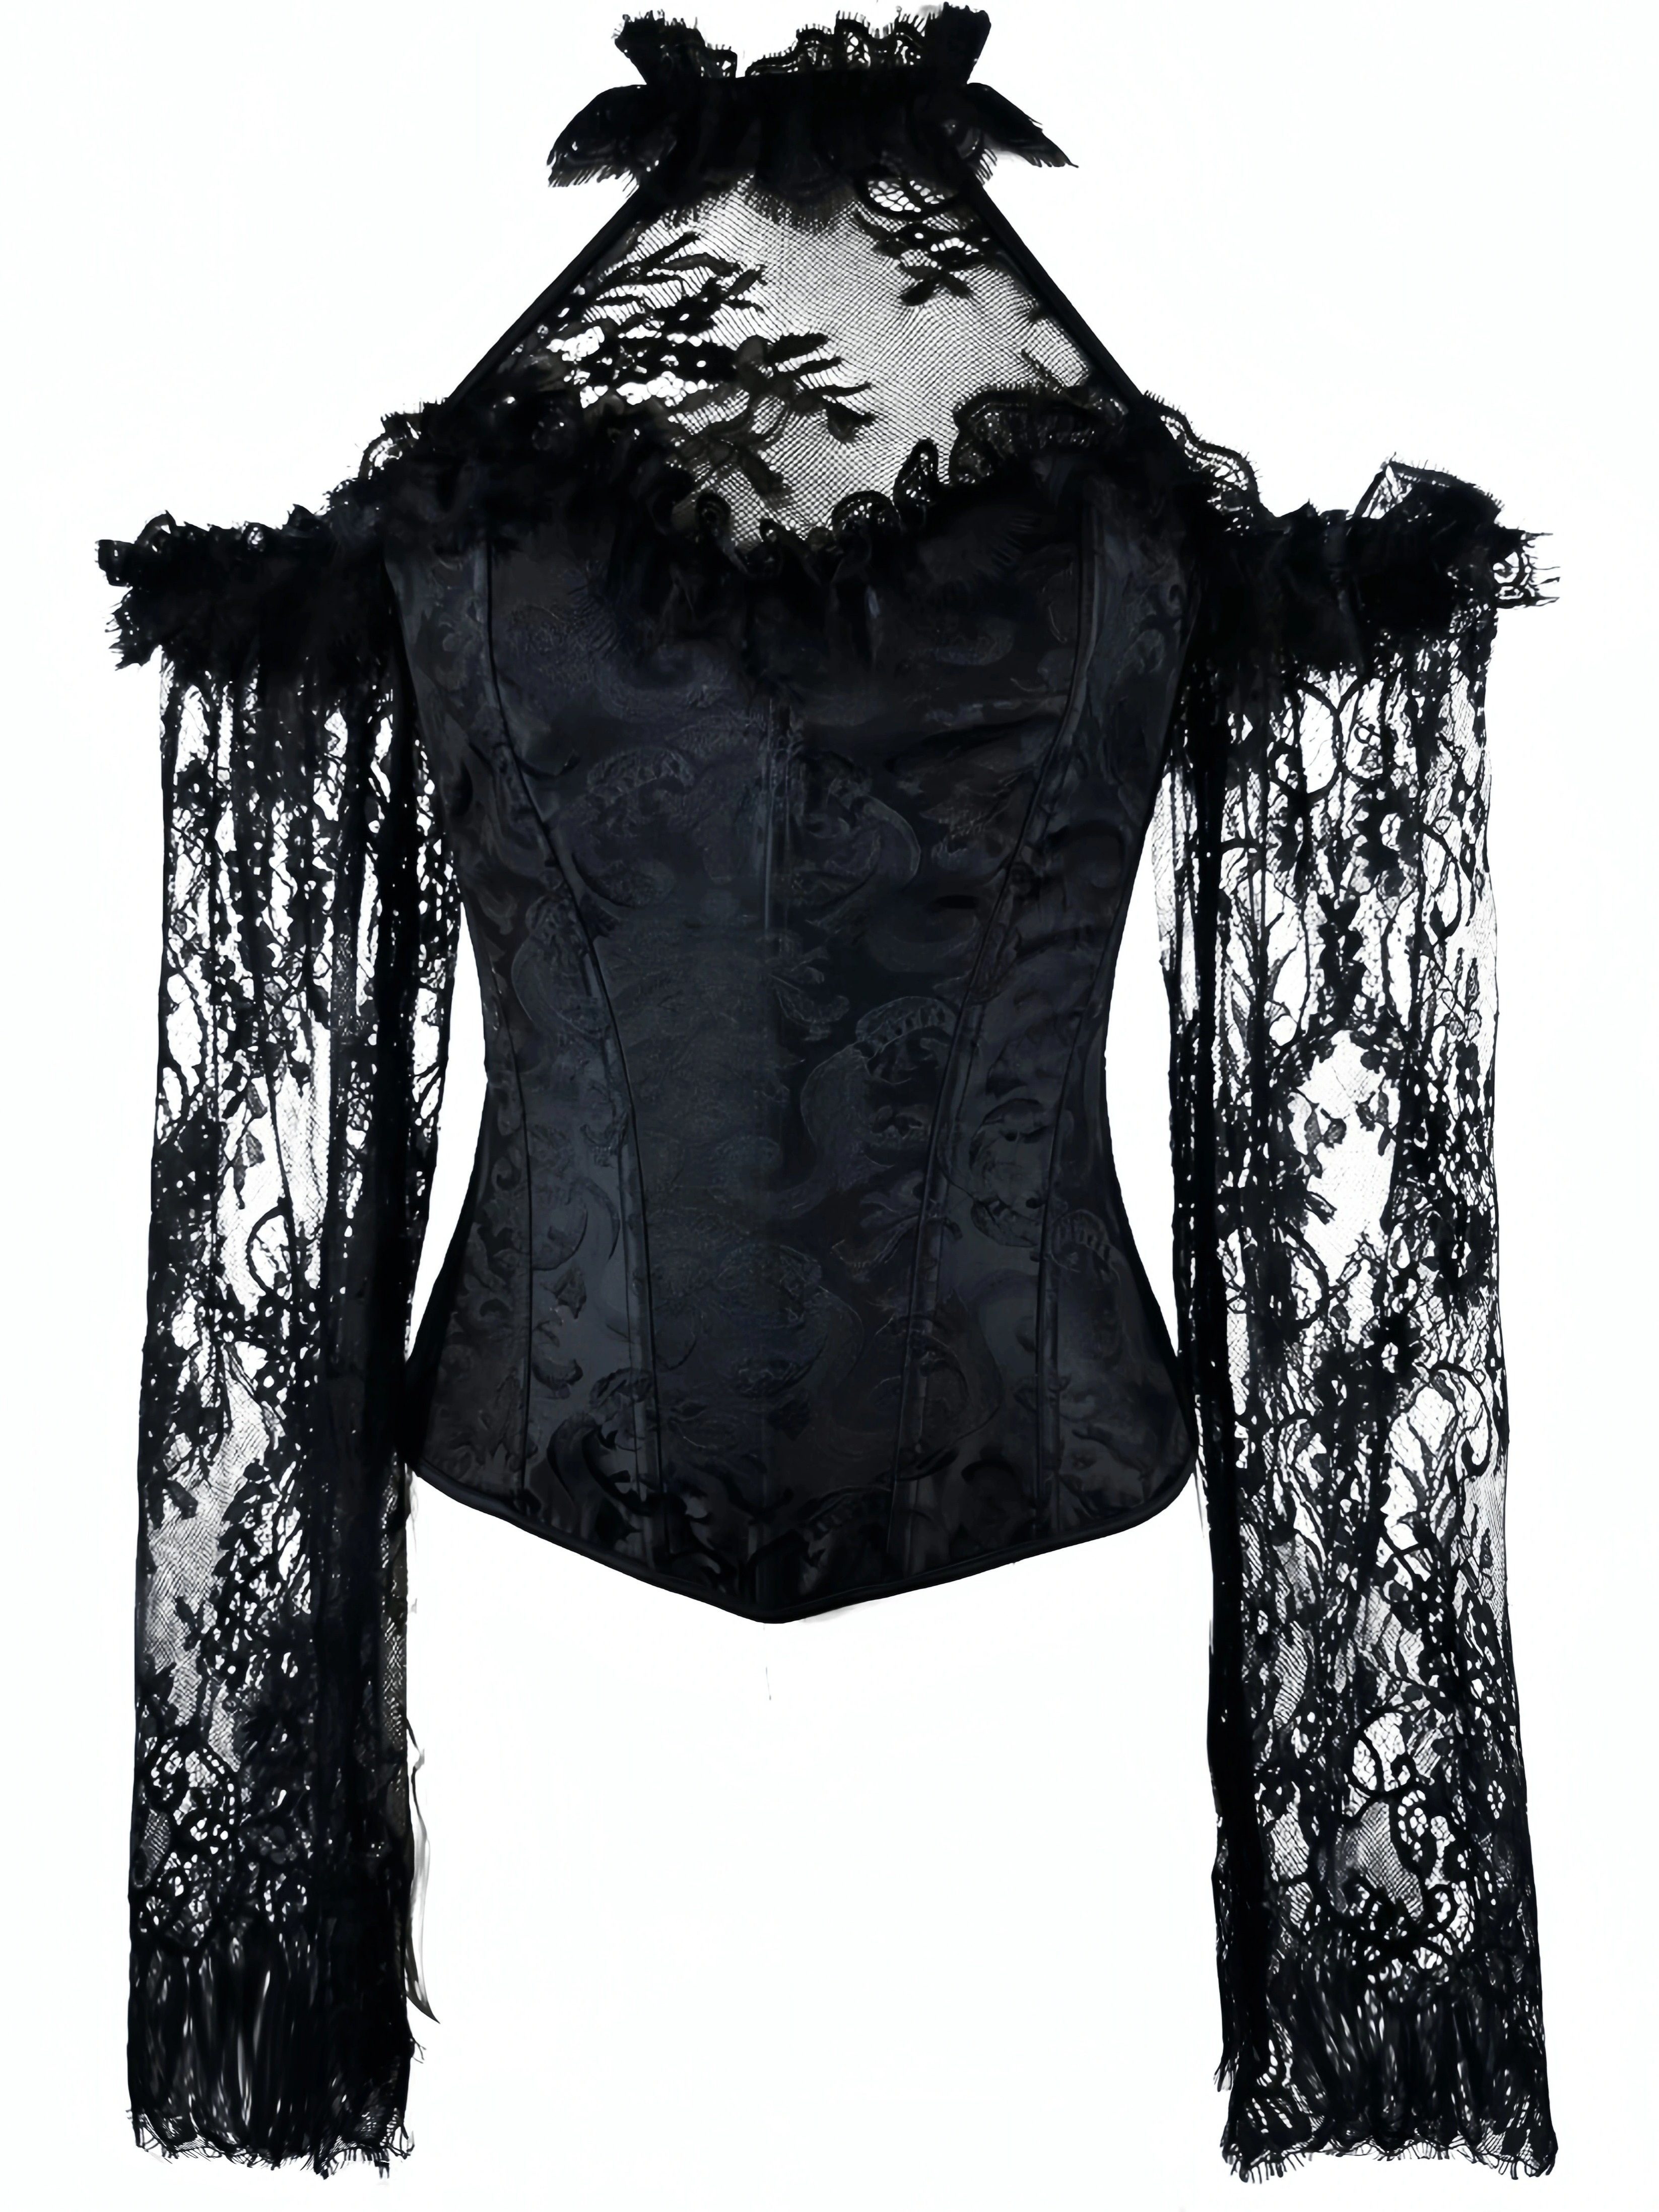 Aboser Black Corset Lingerie Set for Women Lace Sleeve Bustier Top  Renaissance Costume Boned Overbust Body Shaper Push Up Bodysuit